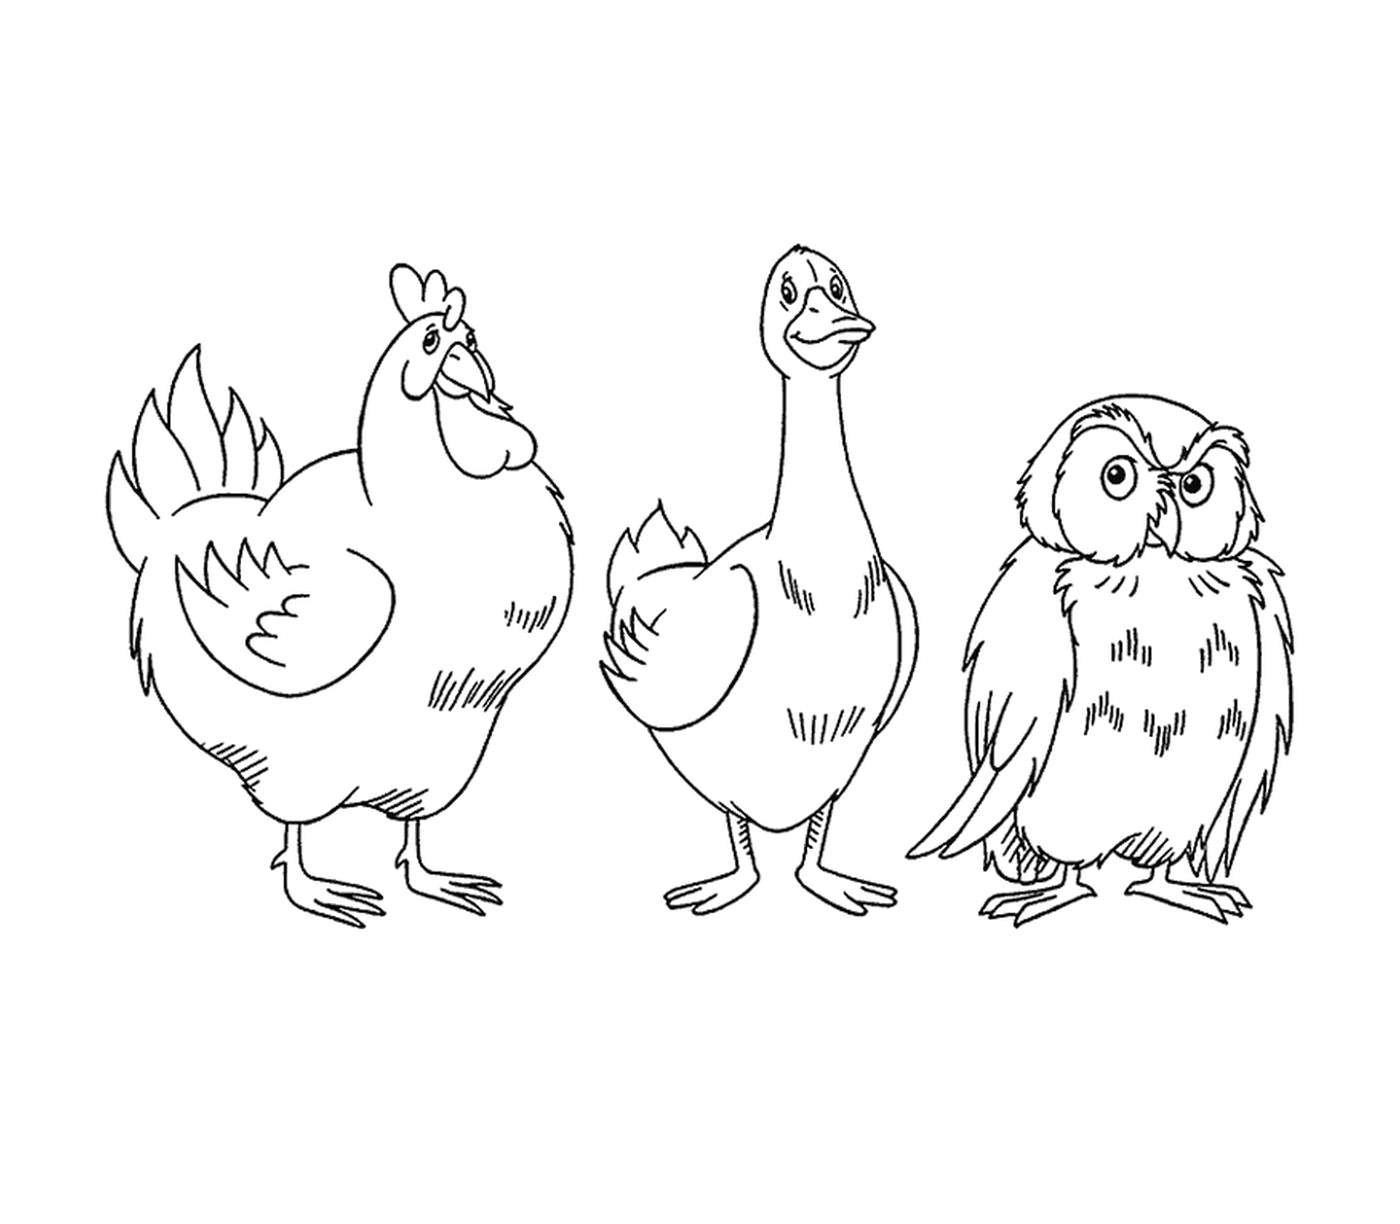  ओसल, मुर्गी, और मुर्गी 